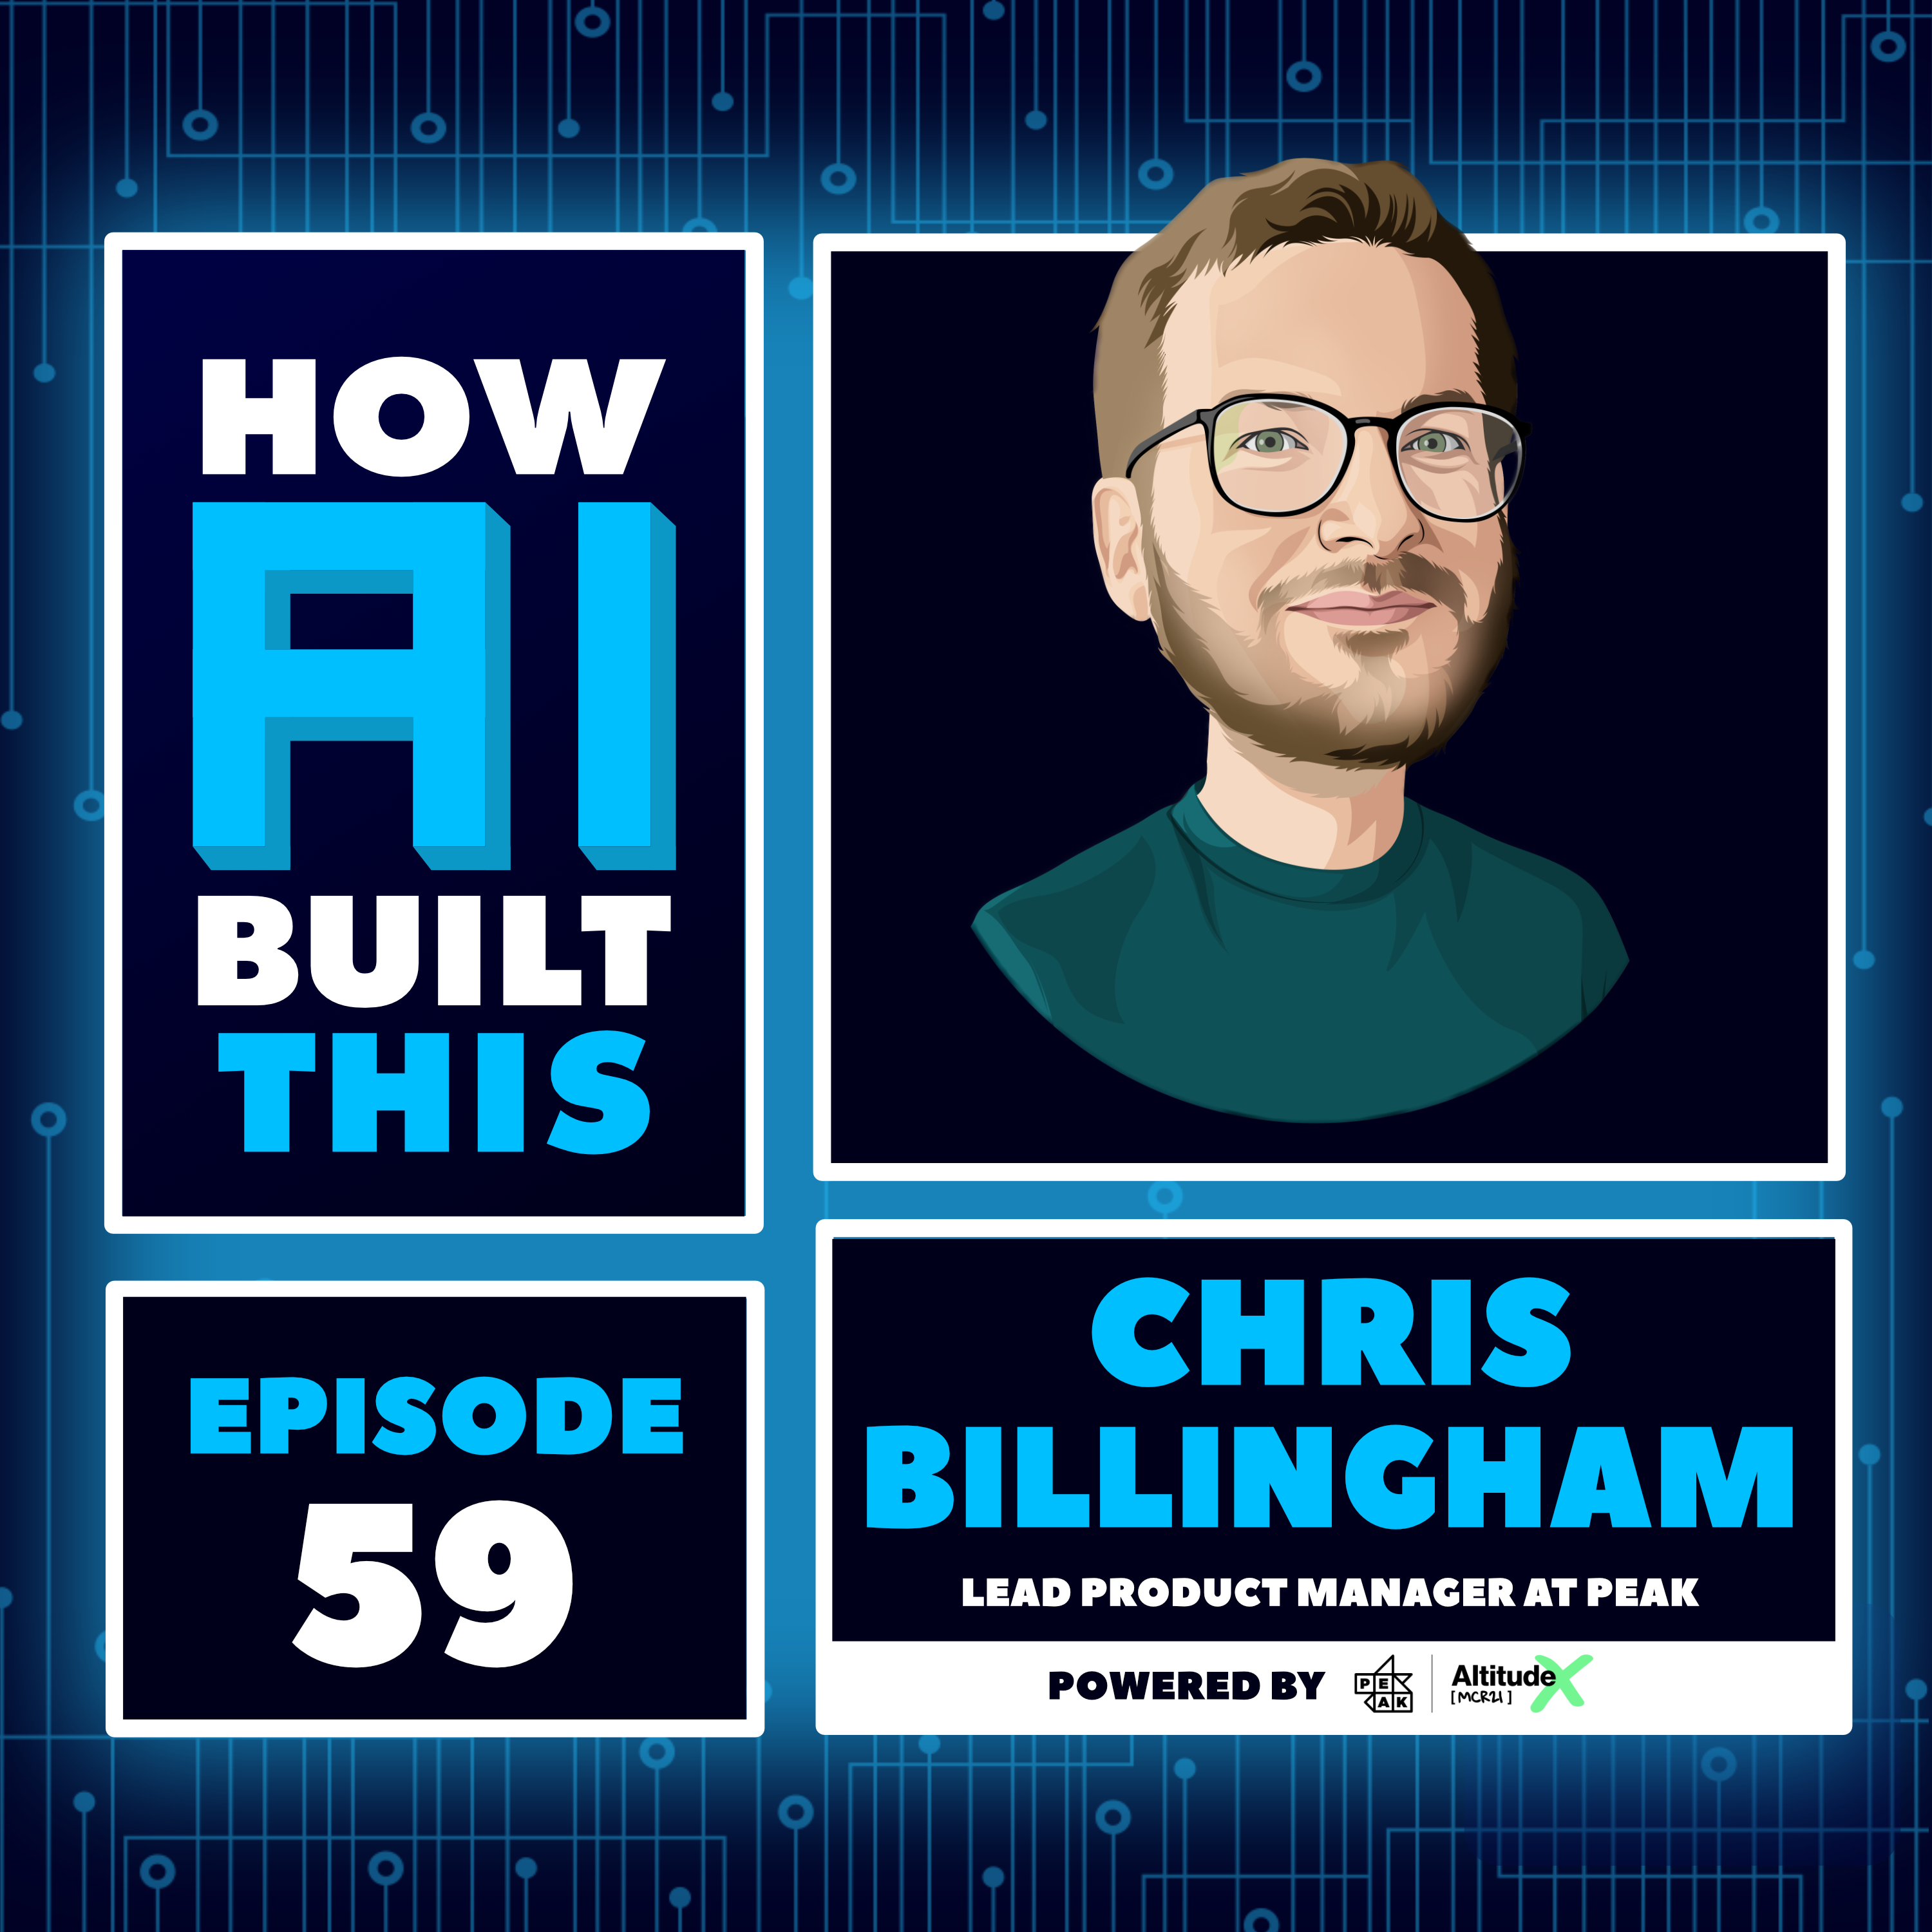 Artwork for podcast How AI Built This